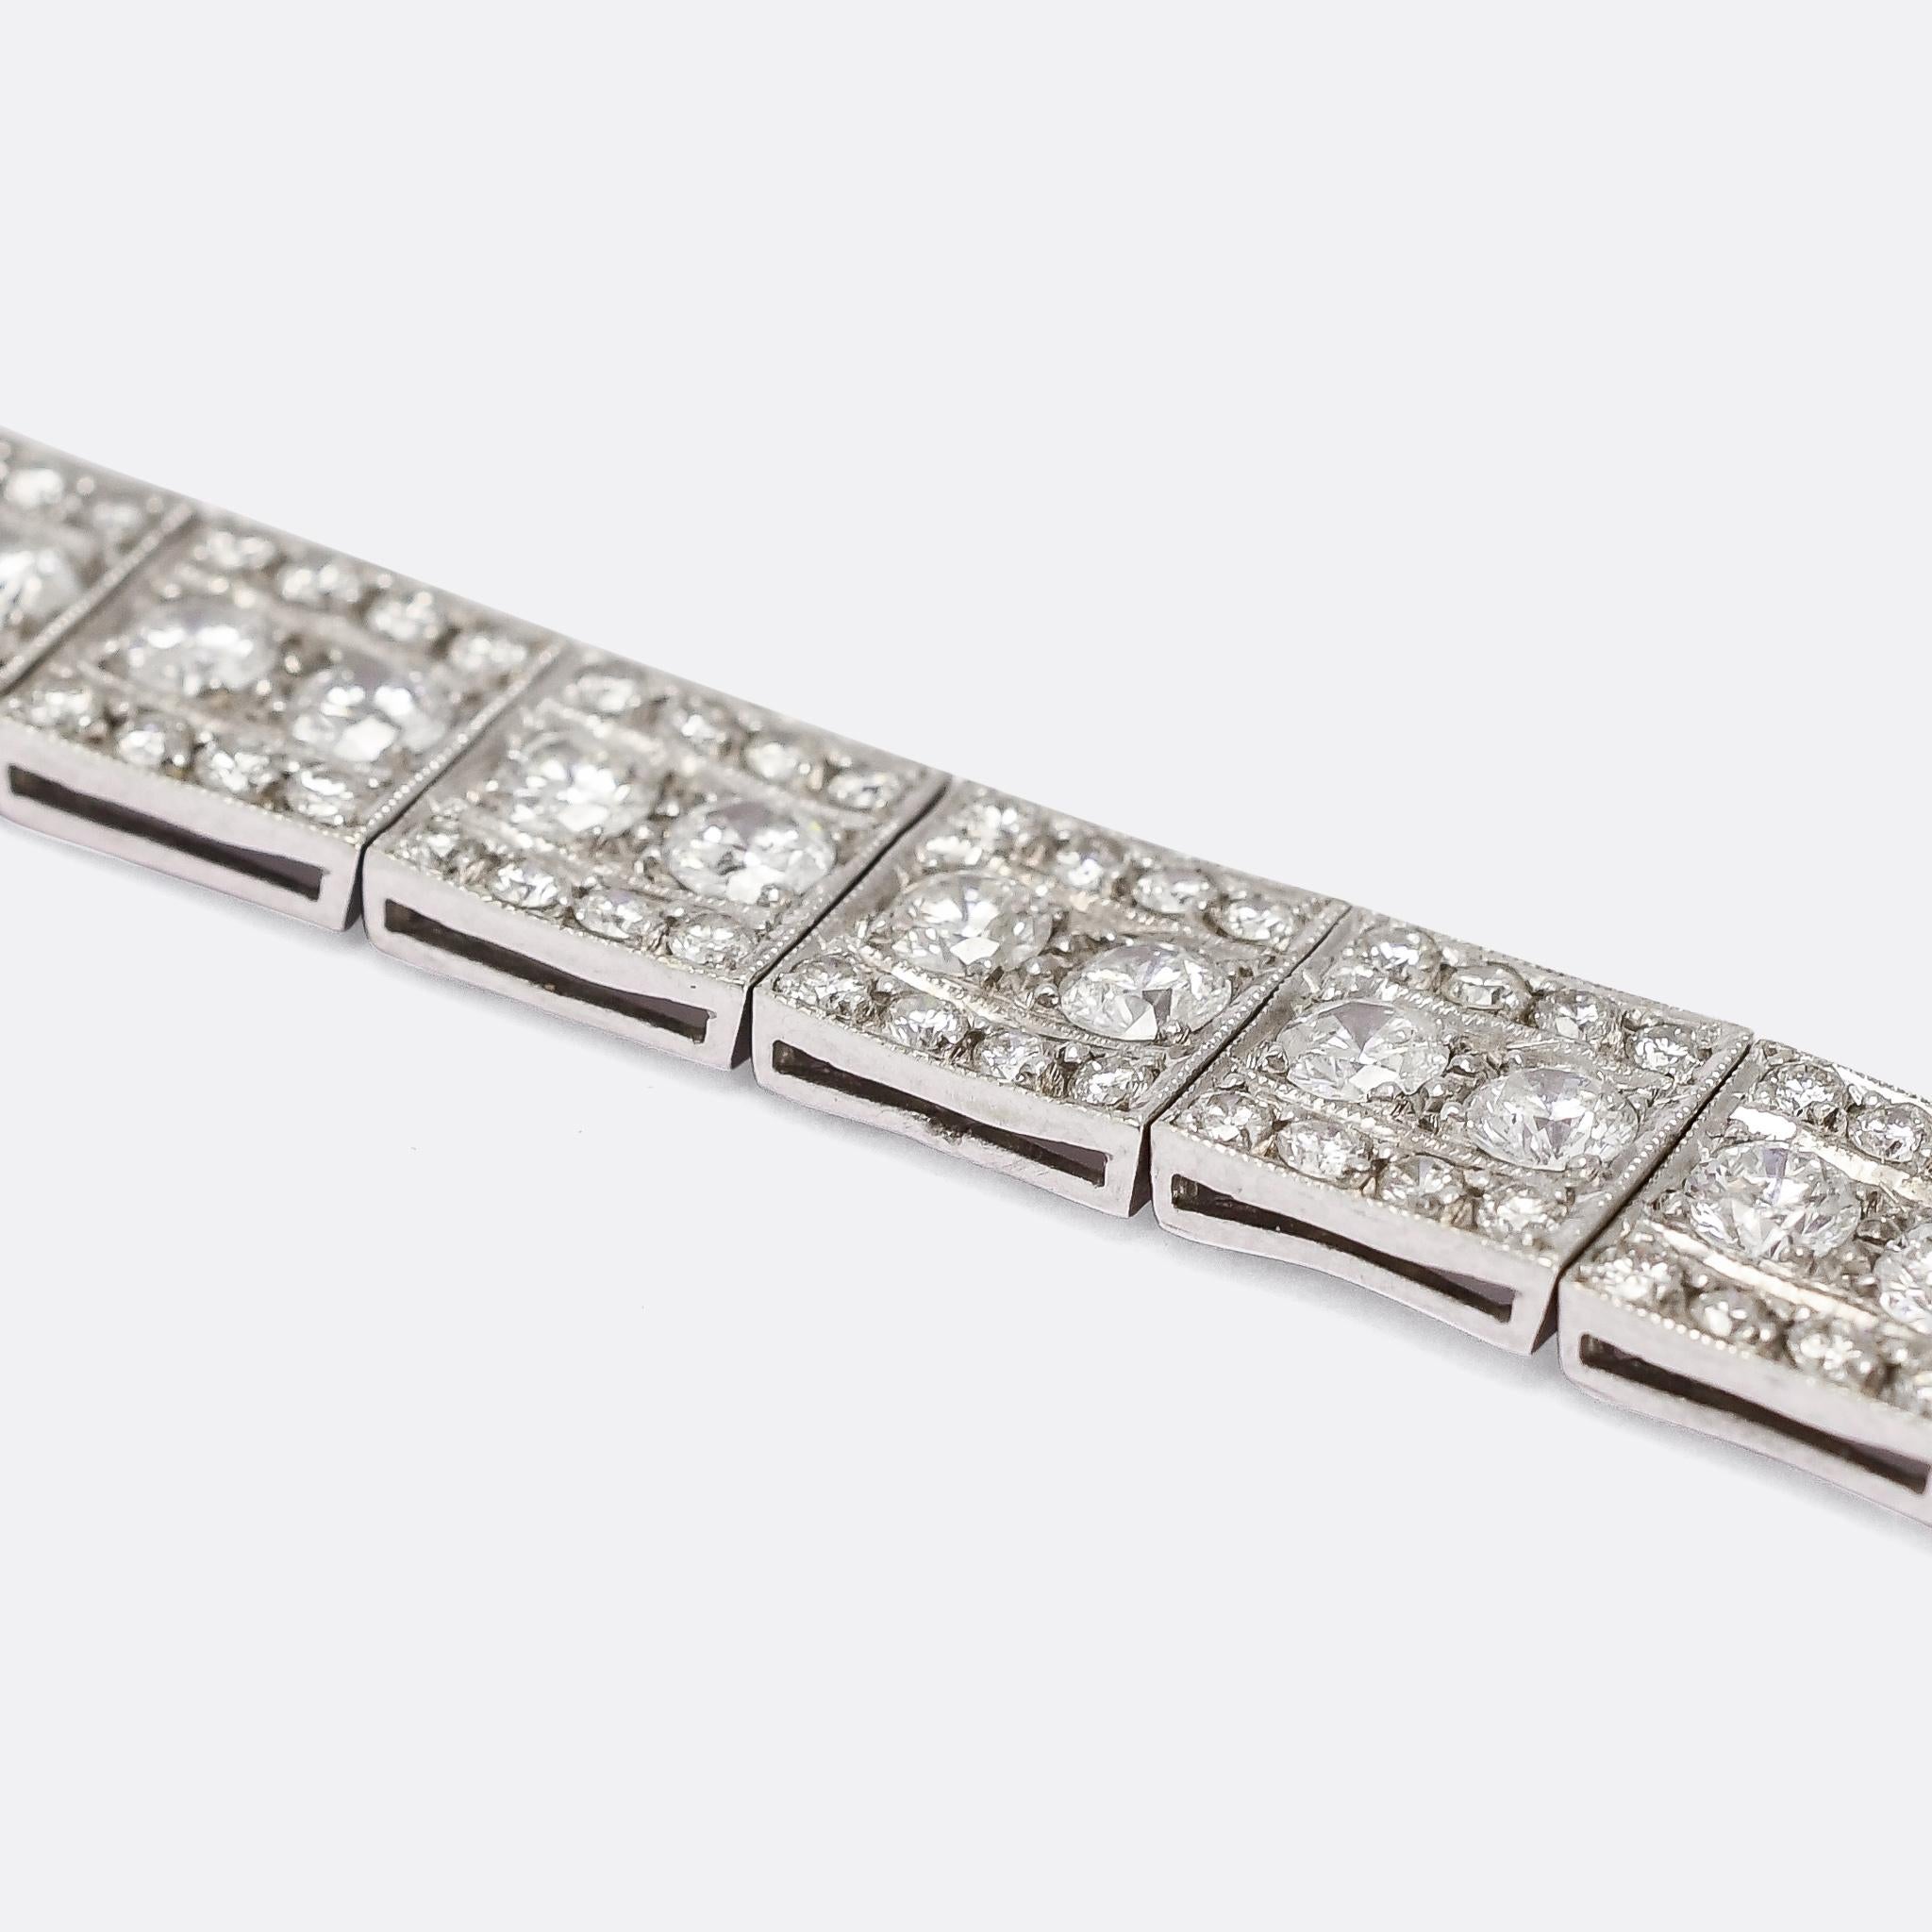 Brilliant Cut Art Deco 8 Carat Diamond Millegrain Bracelet